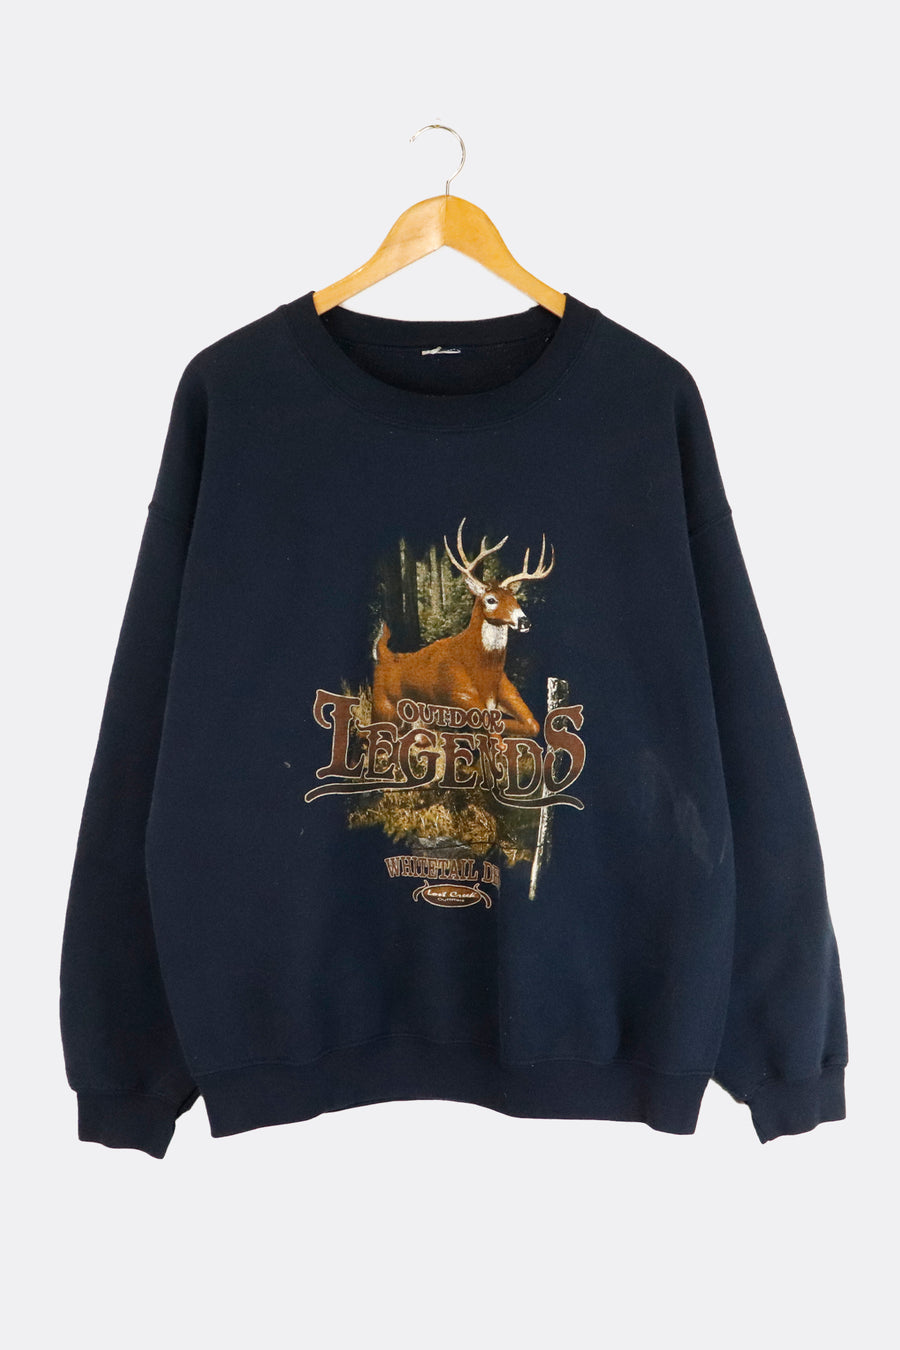 Vintage Outdoor Legends Whitetail Deer Painted Style Deer Graphic Outlined Font Vinyl Sweatshirt